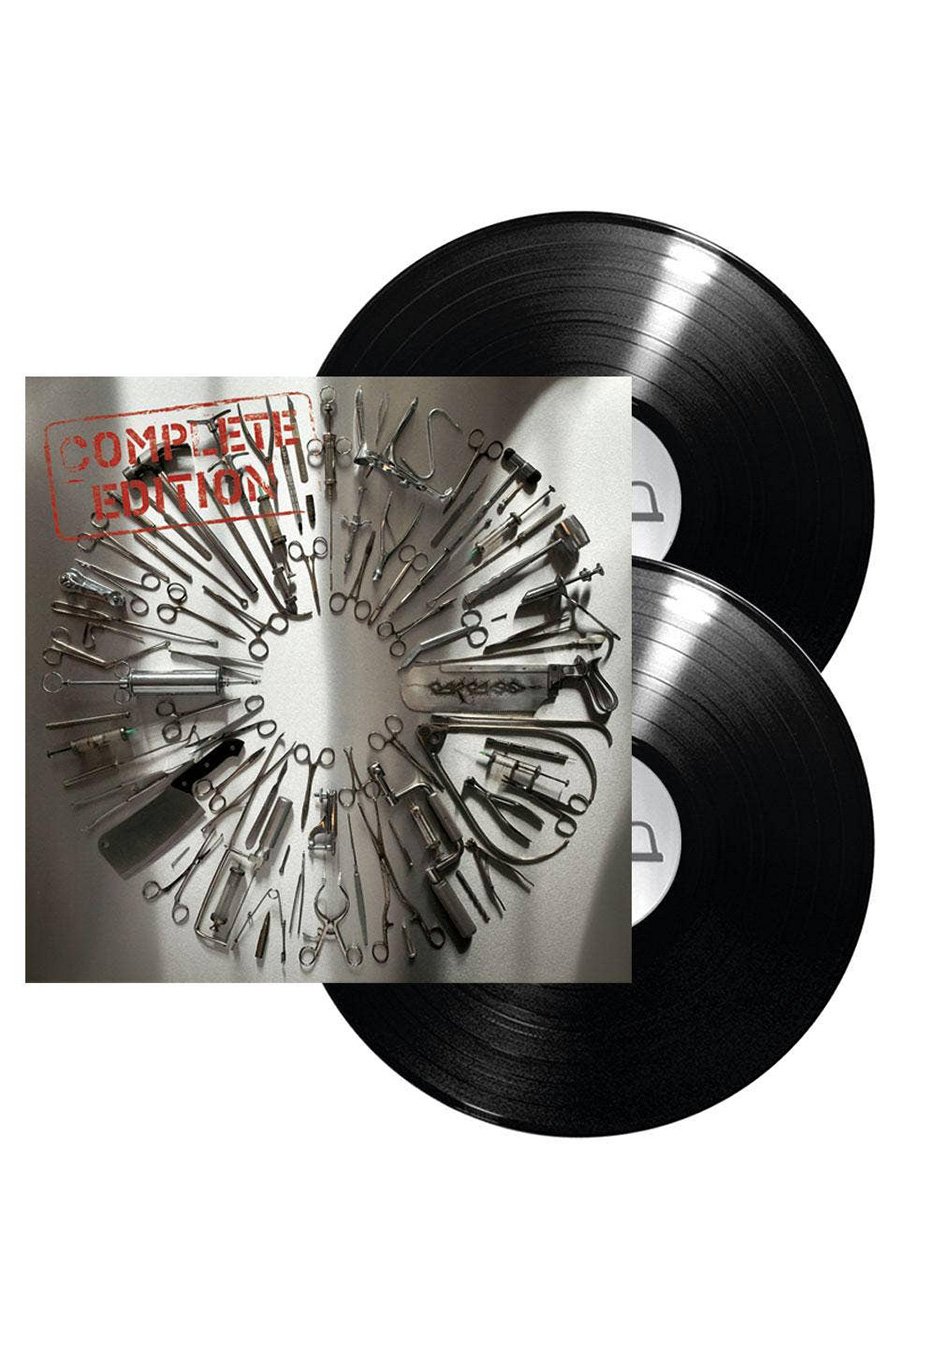 Carcass - Surgical Steel Complete Edition Black Vinyl - 2 Vinyl